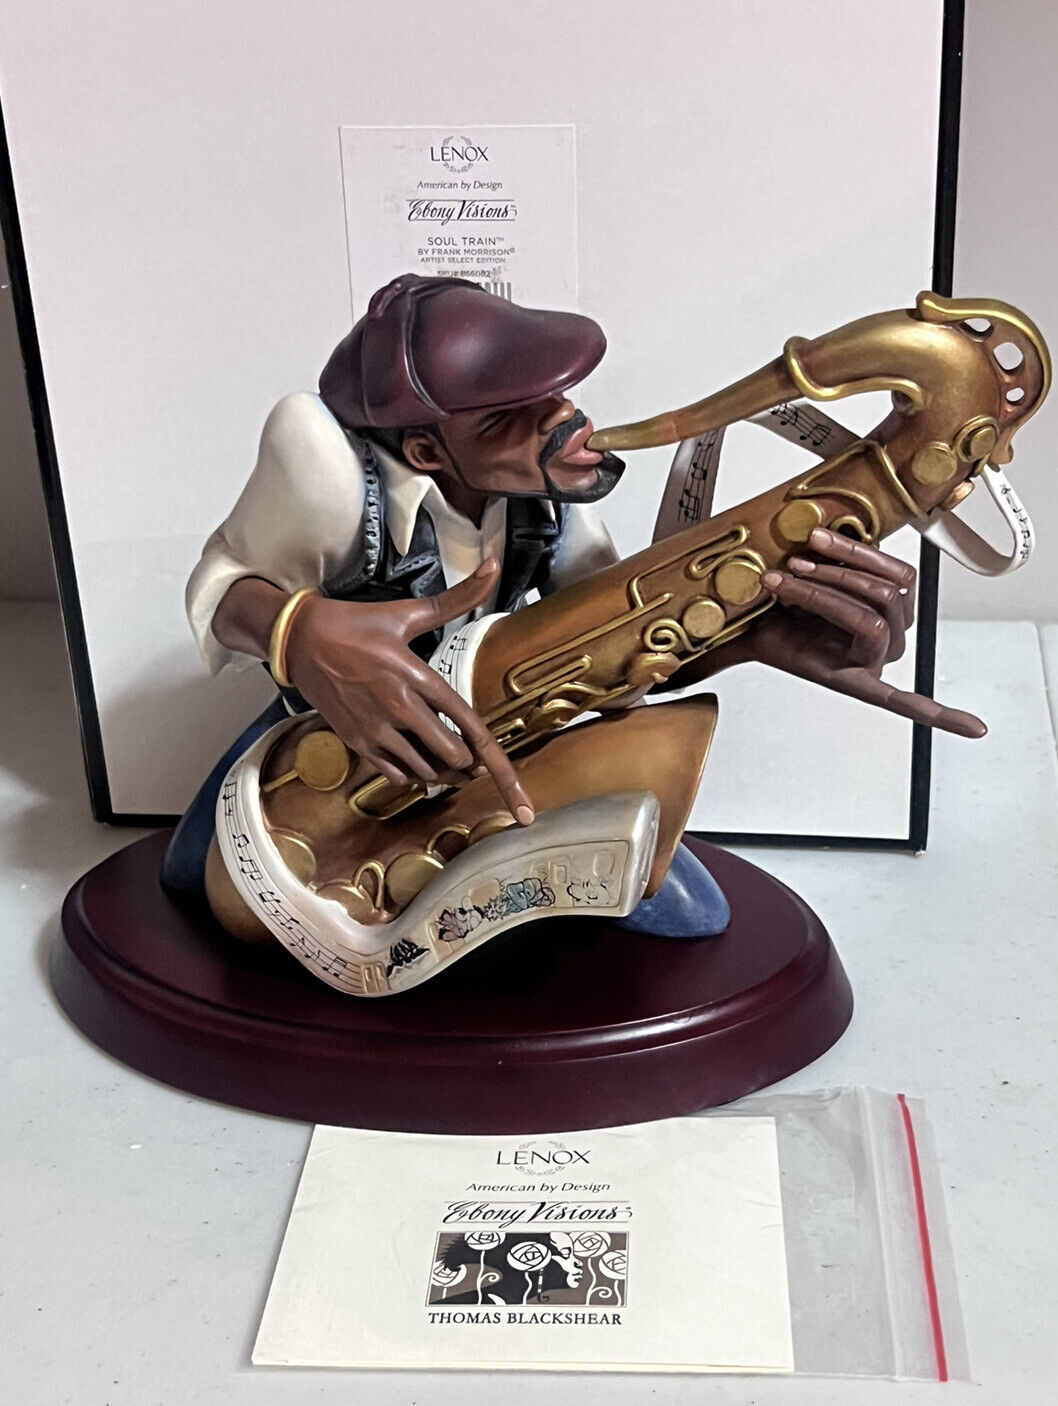 Lenox Ebony Visions SOUL TRAIN Frank Morrison Sax Artist Select Figurine New